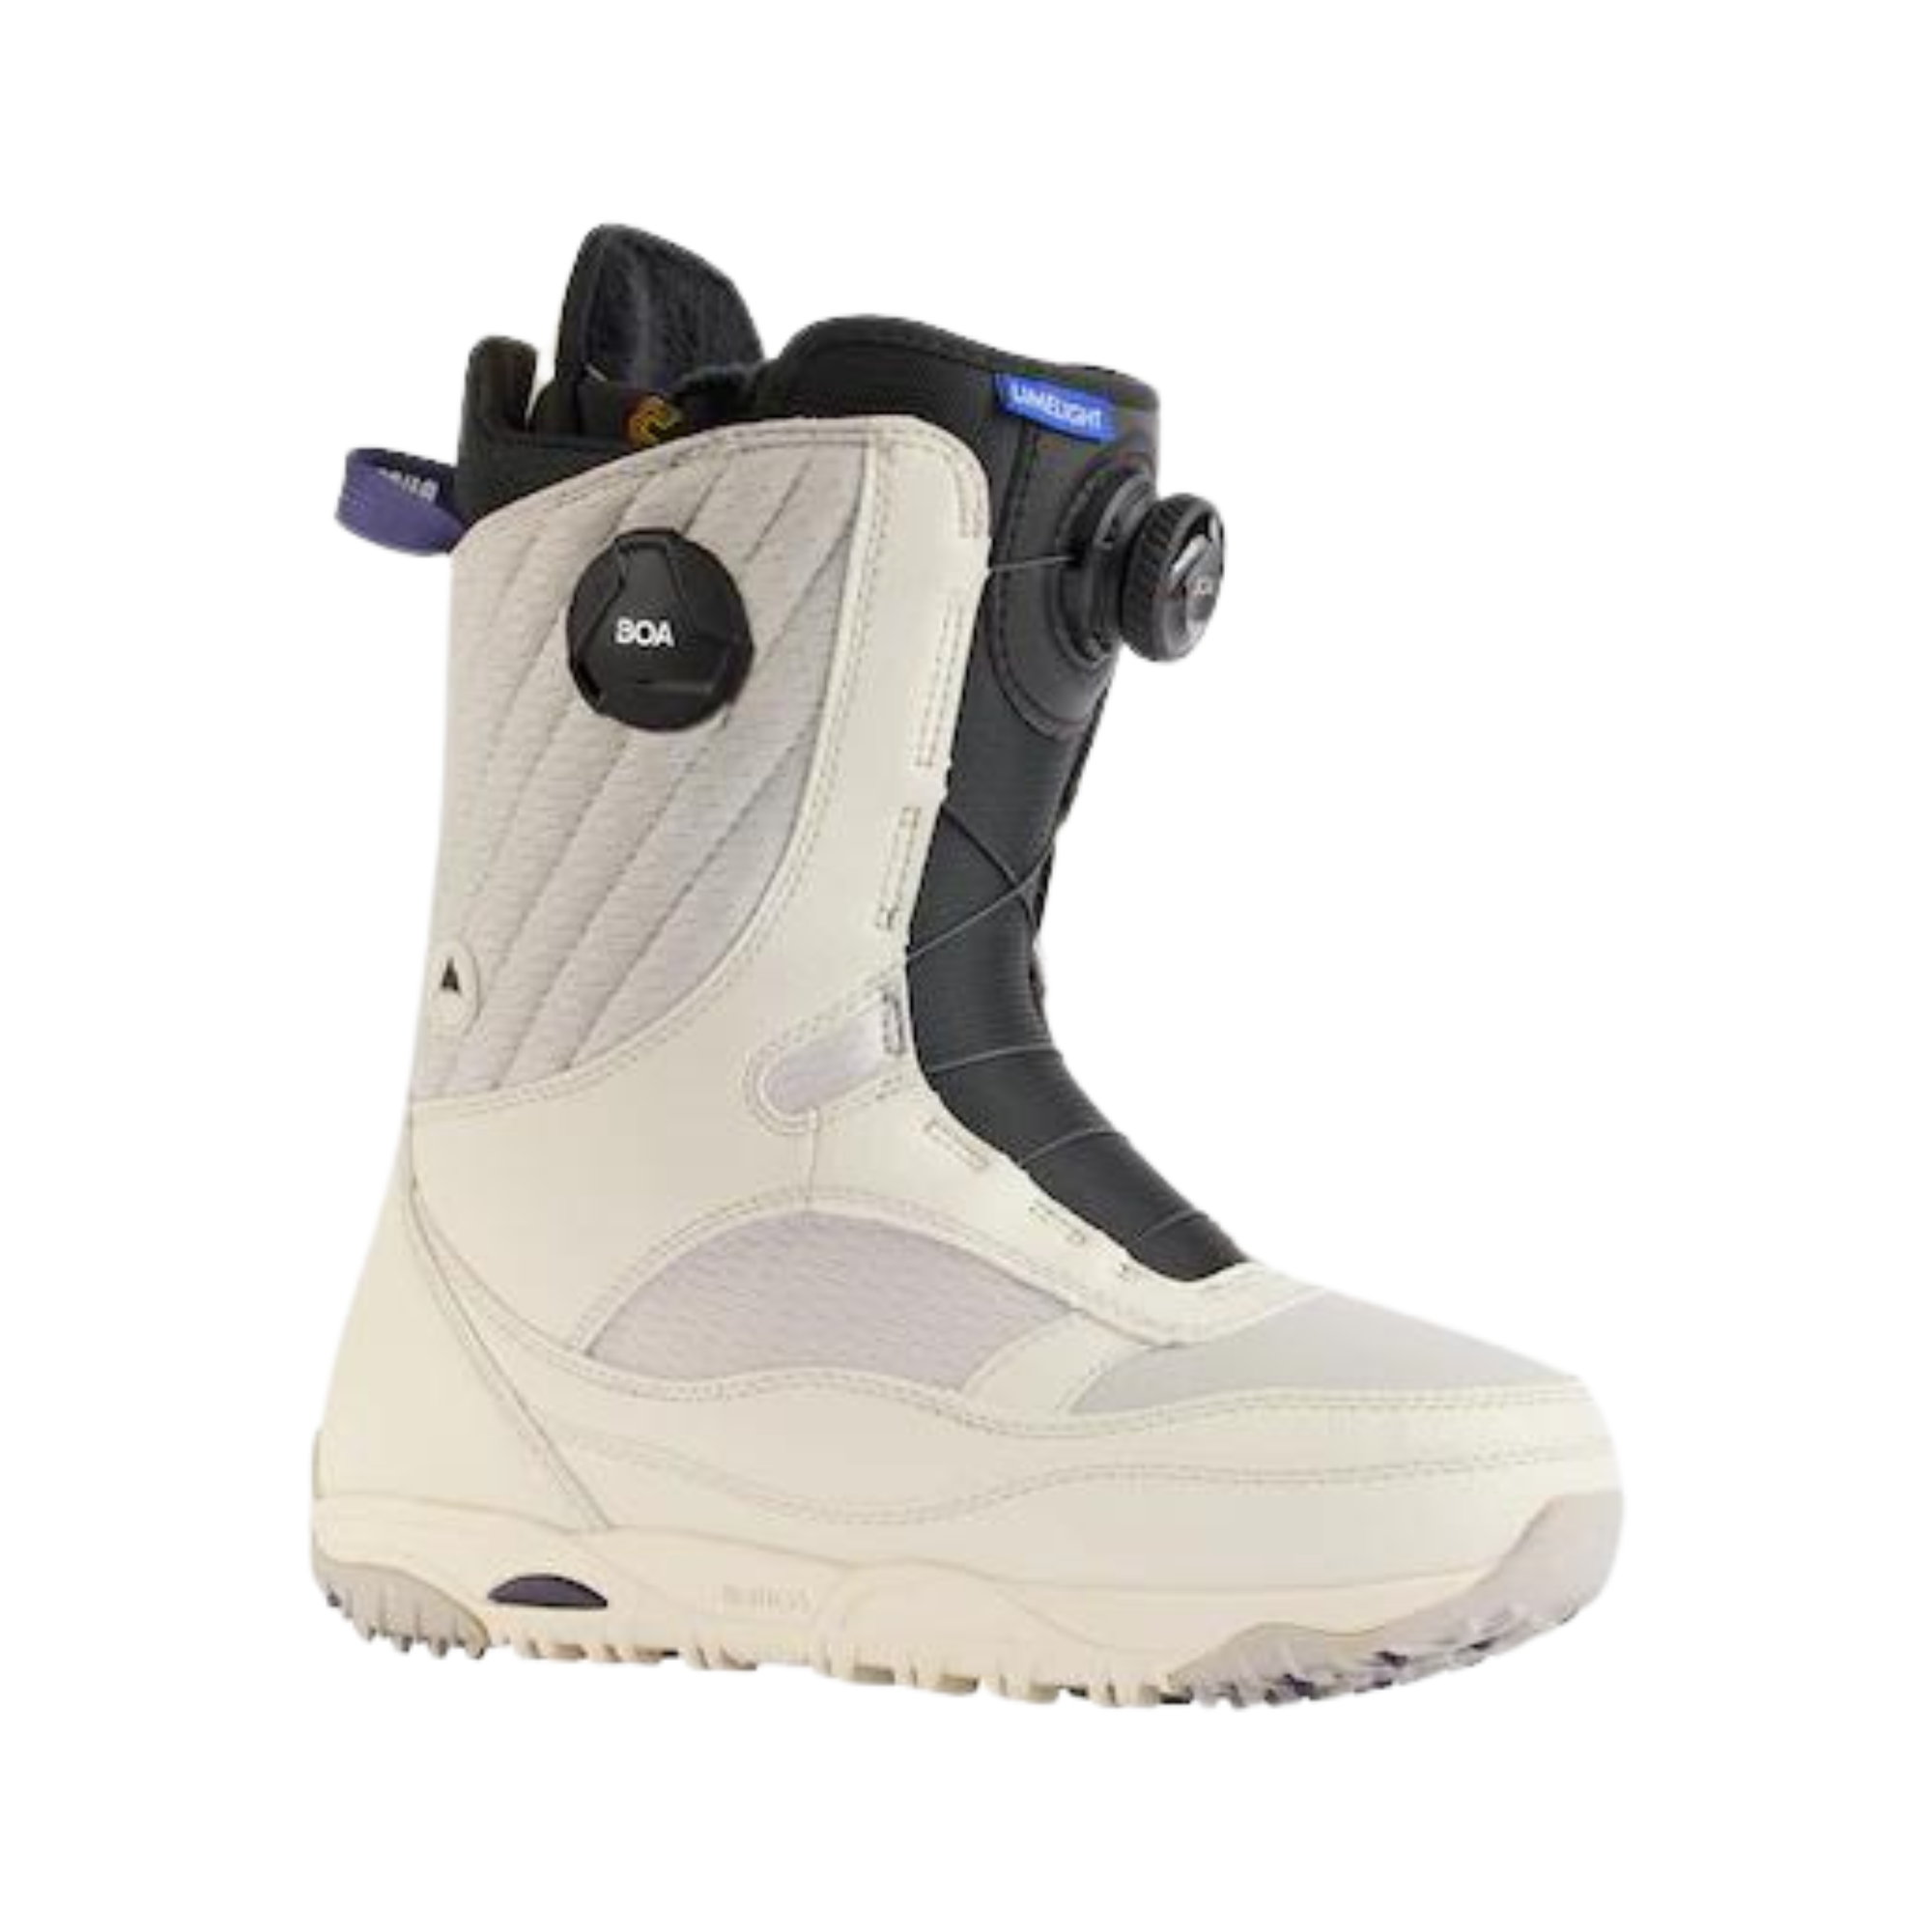 Burton Women's Limelight BOA® Snowboard Boots - Wide - Stout White